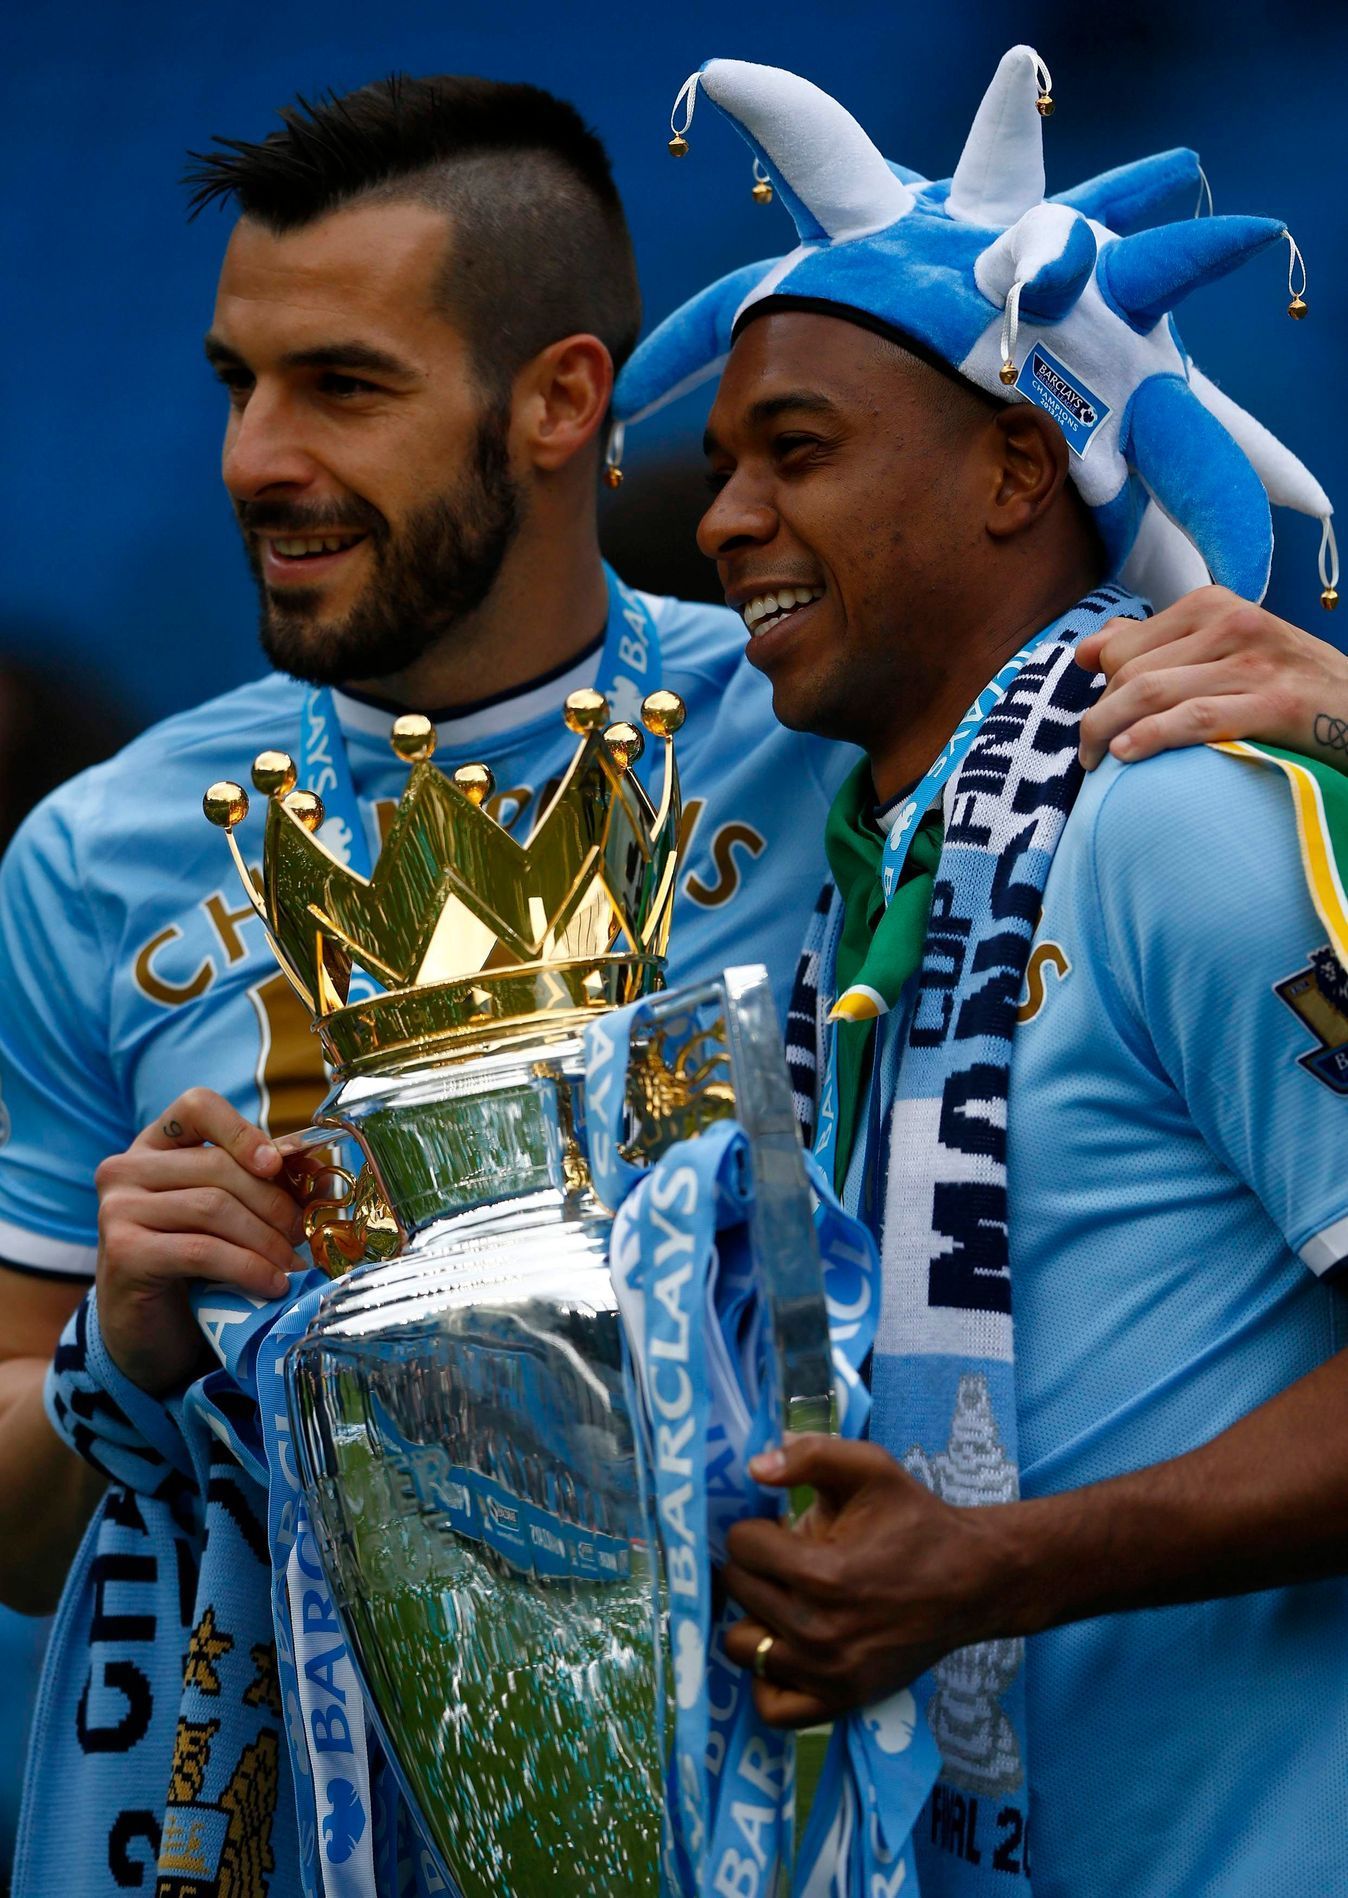 Manchester City's Alvaro Negredo and team mate Fernandinho celebrate after winning the English Premier League trophy